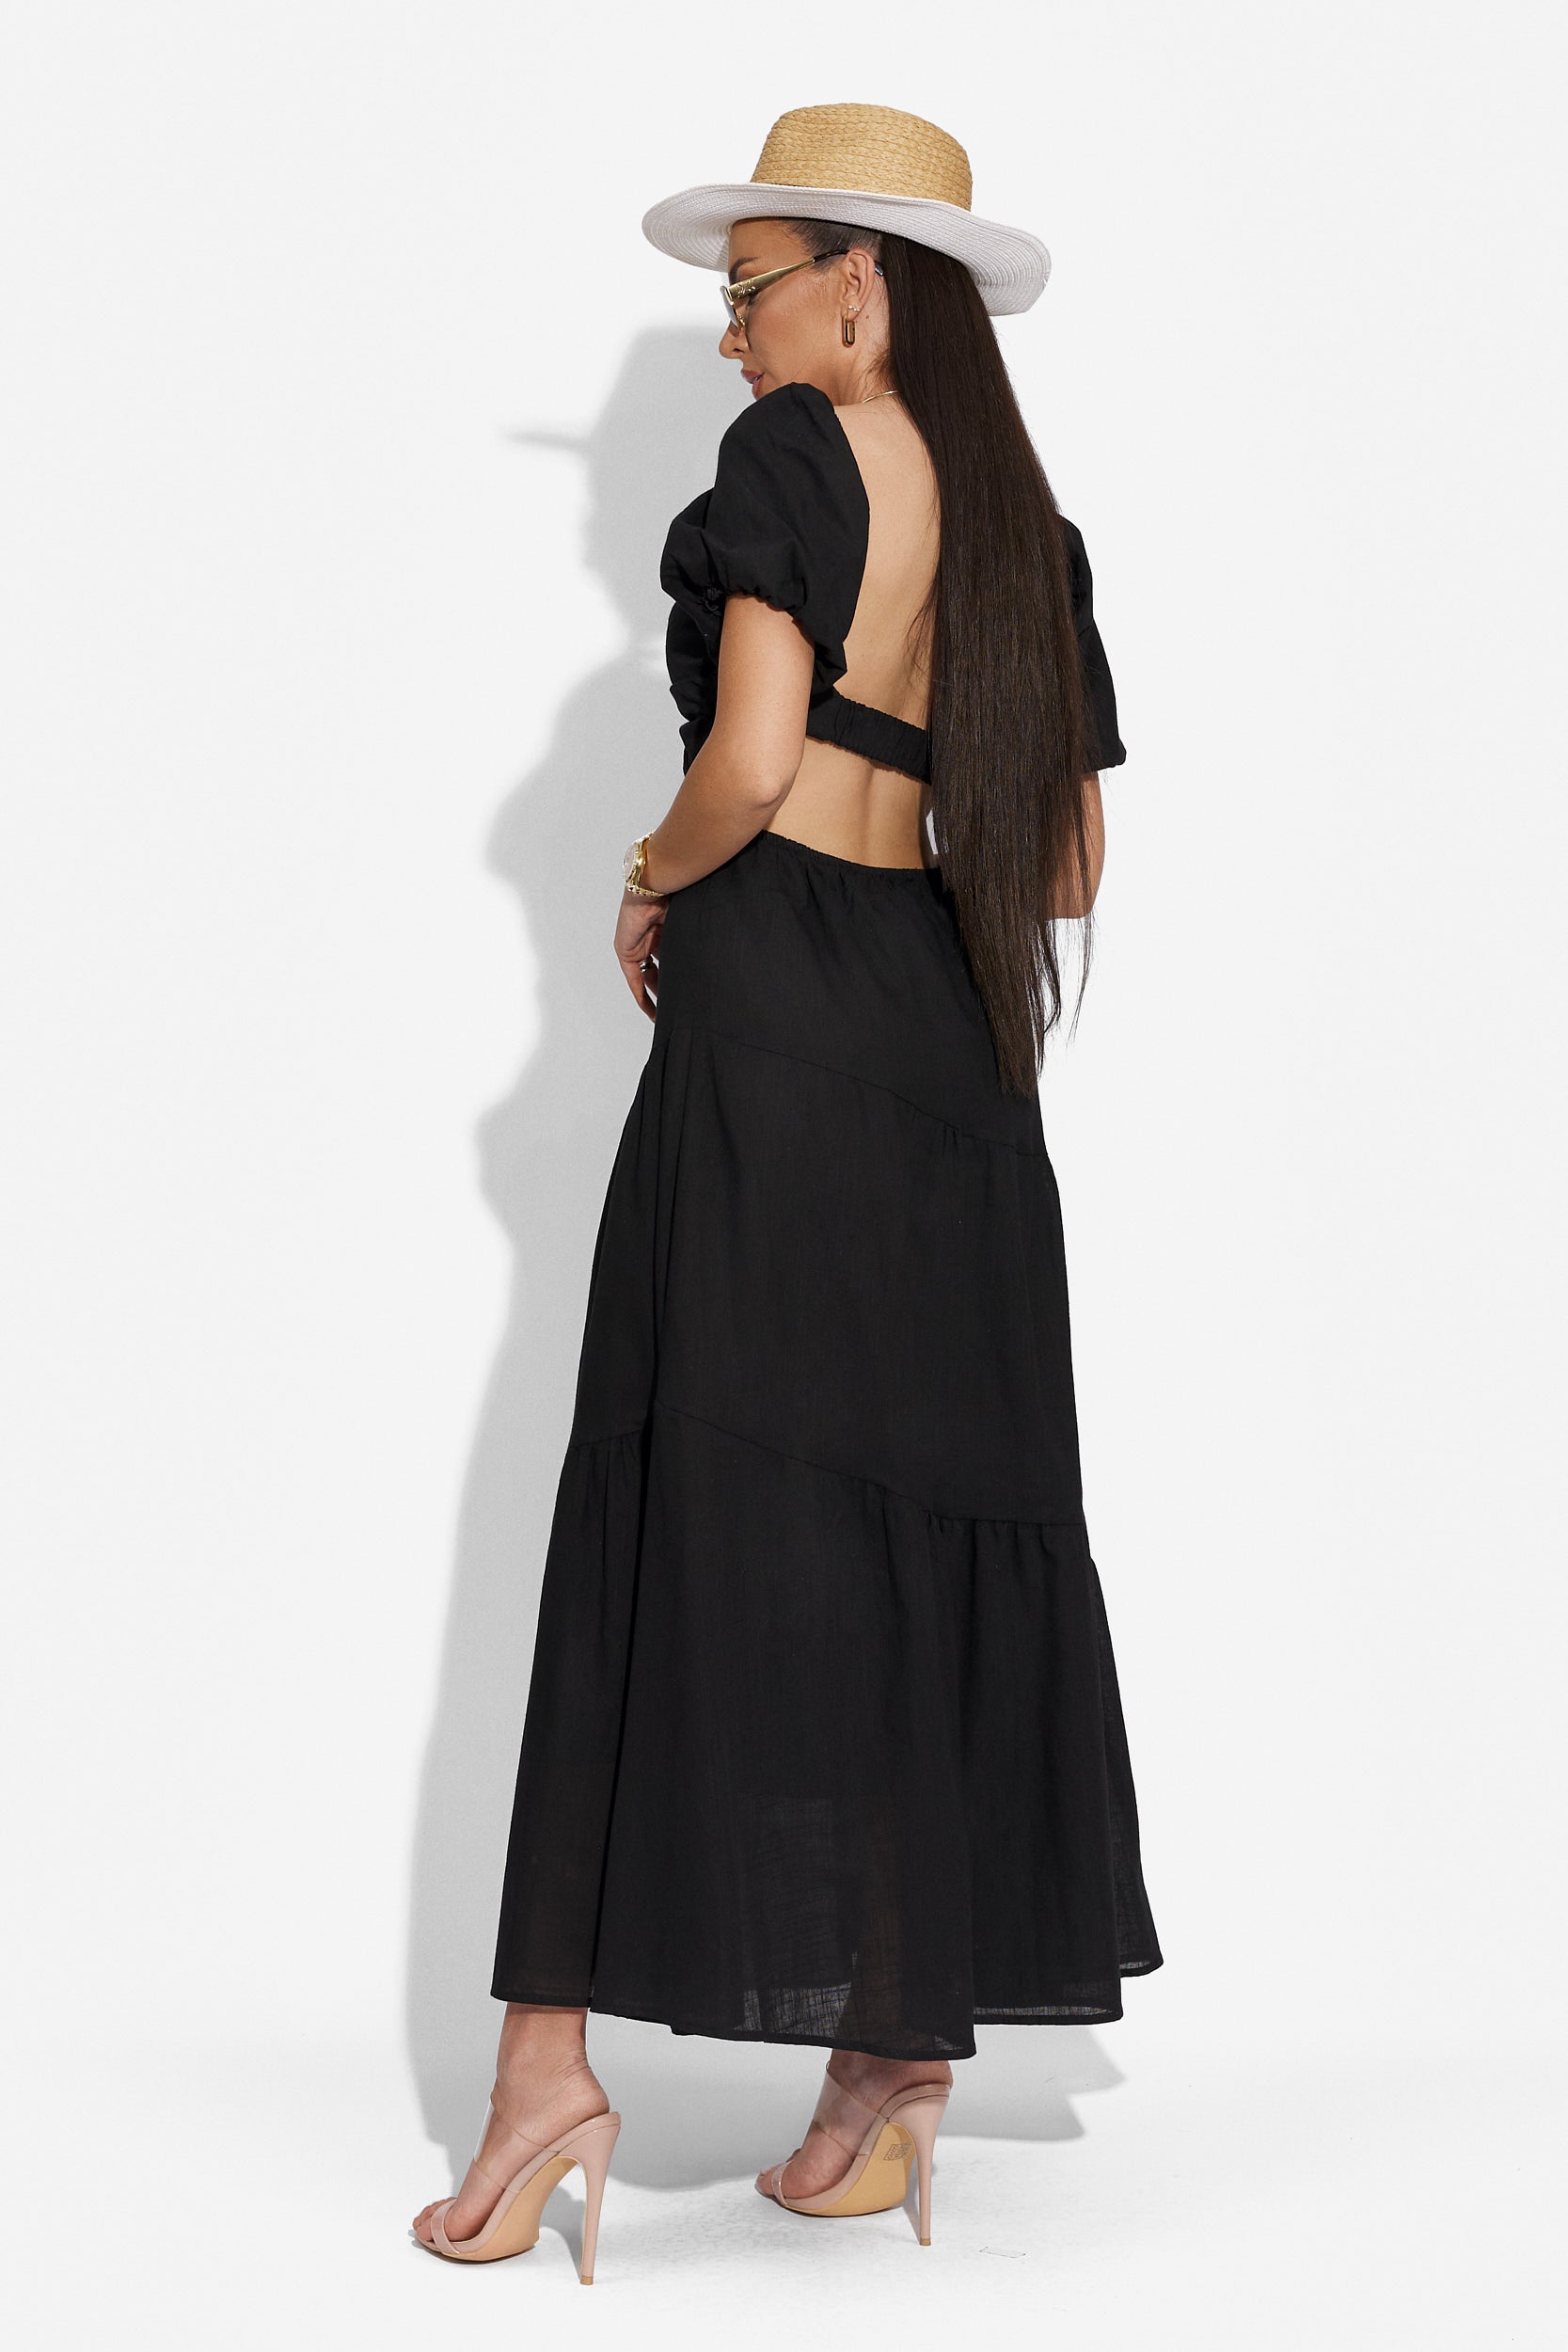 Black long lady dress Mosysca Bogas